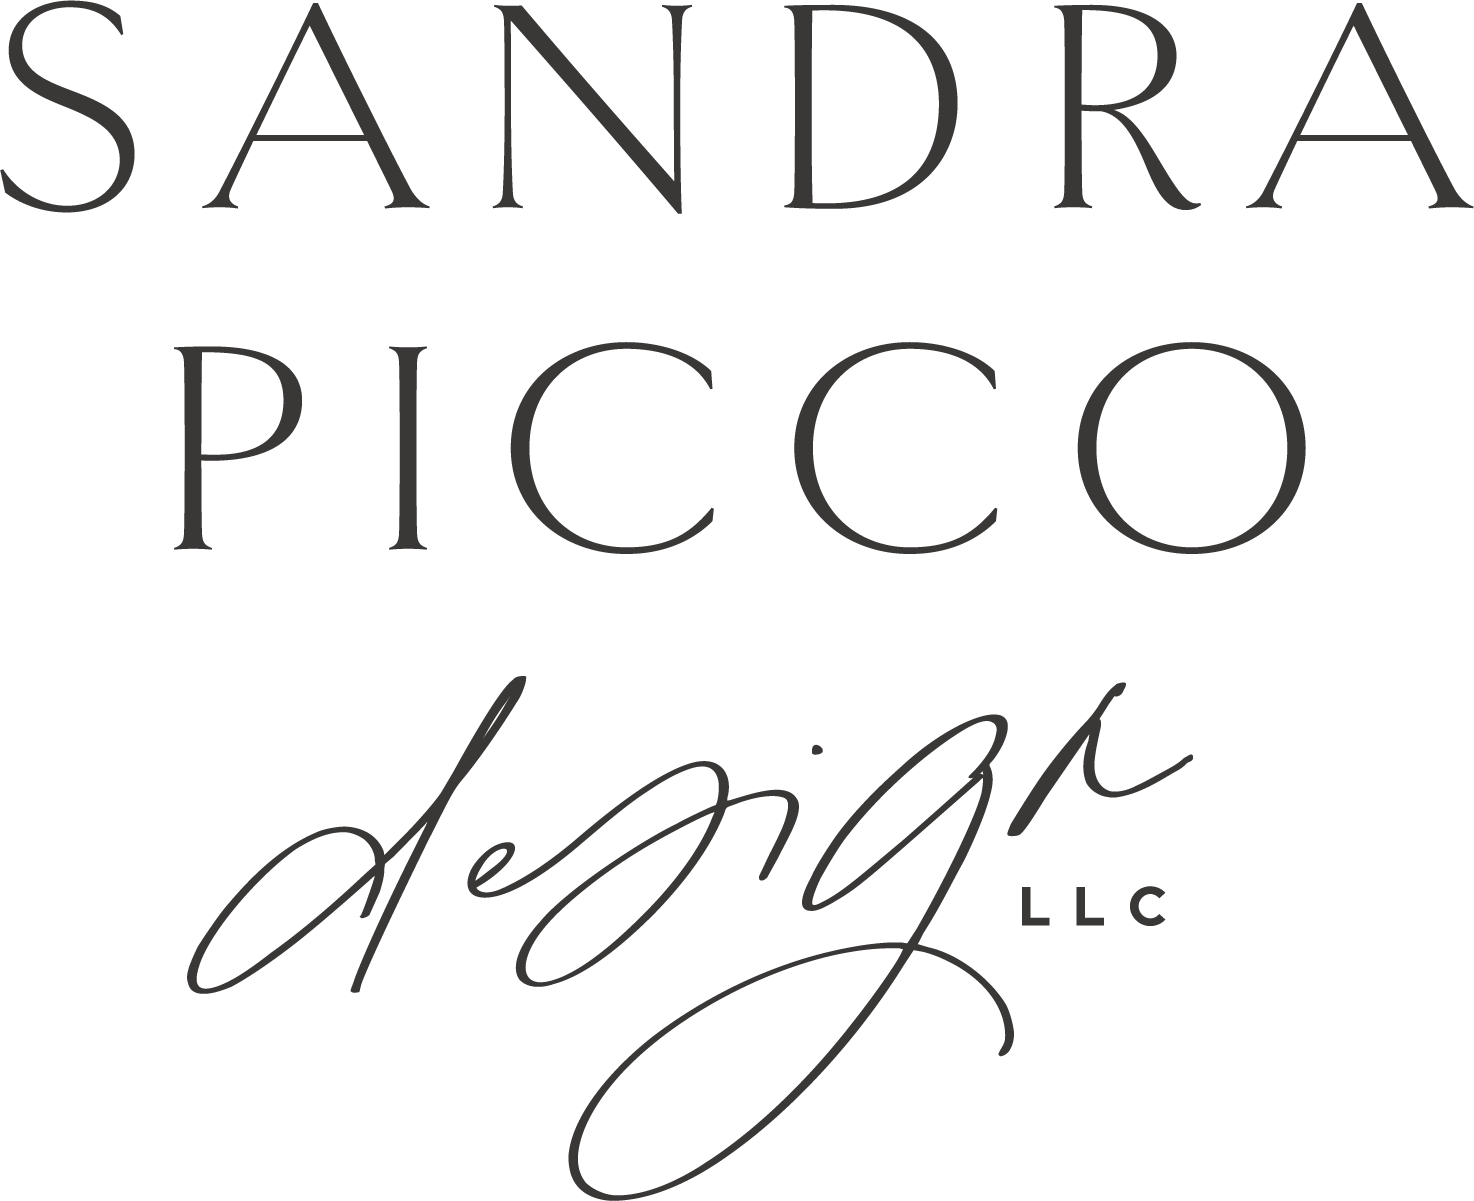 Sandra Picco Design logo